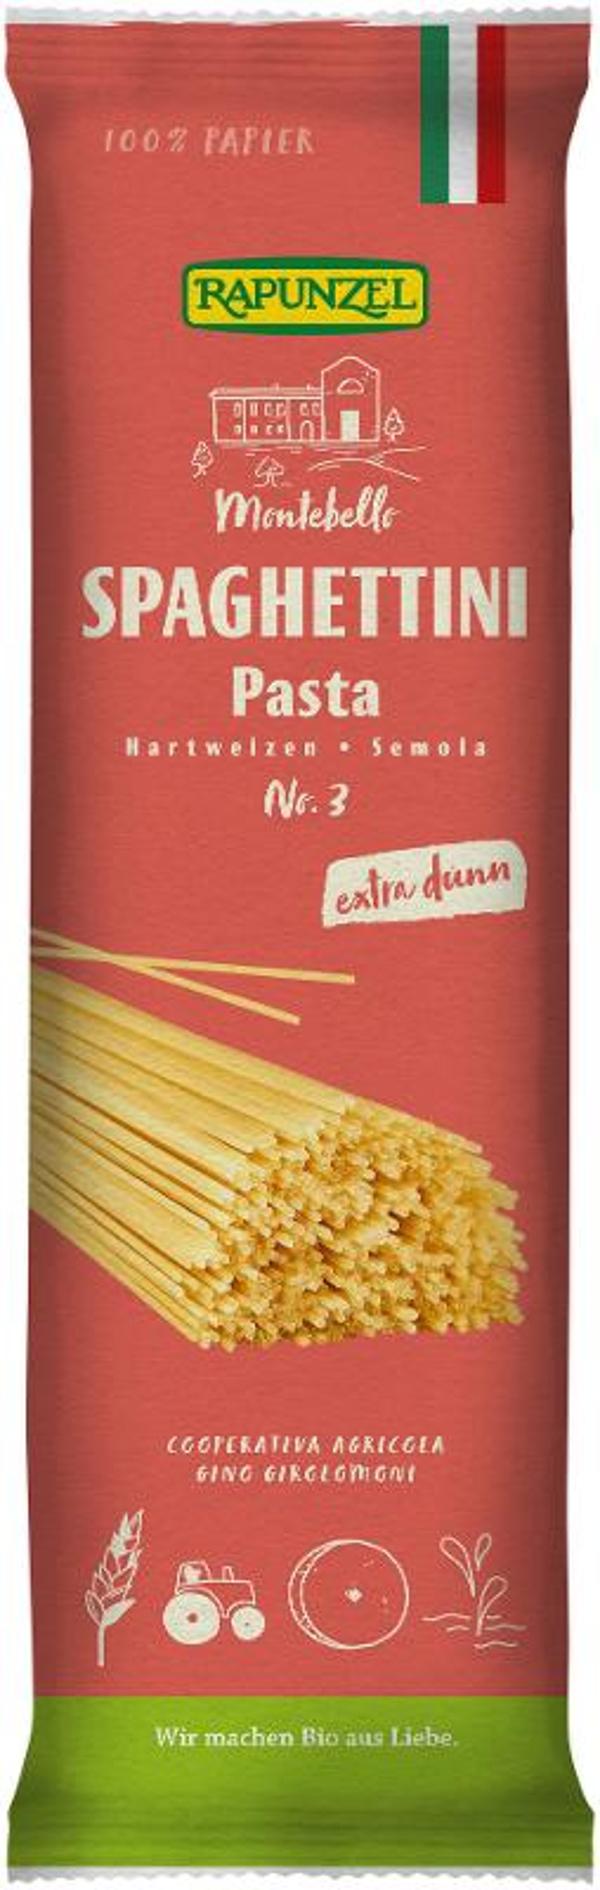 Produktfoto zu Spaghettini Semola, no.3 500g Rapunzel